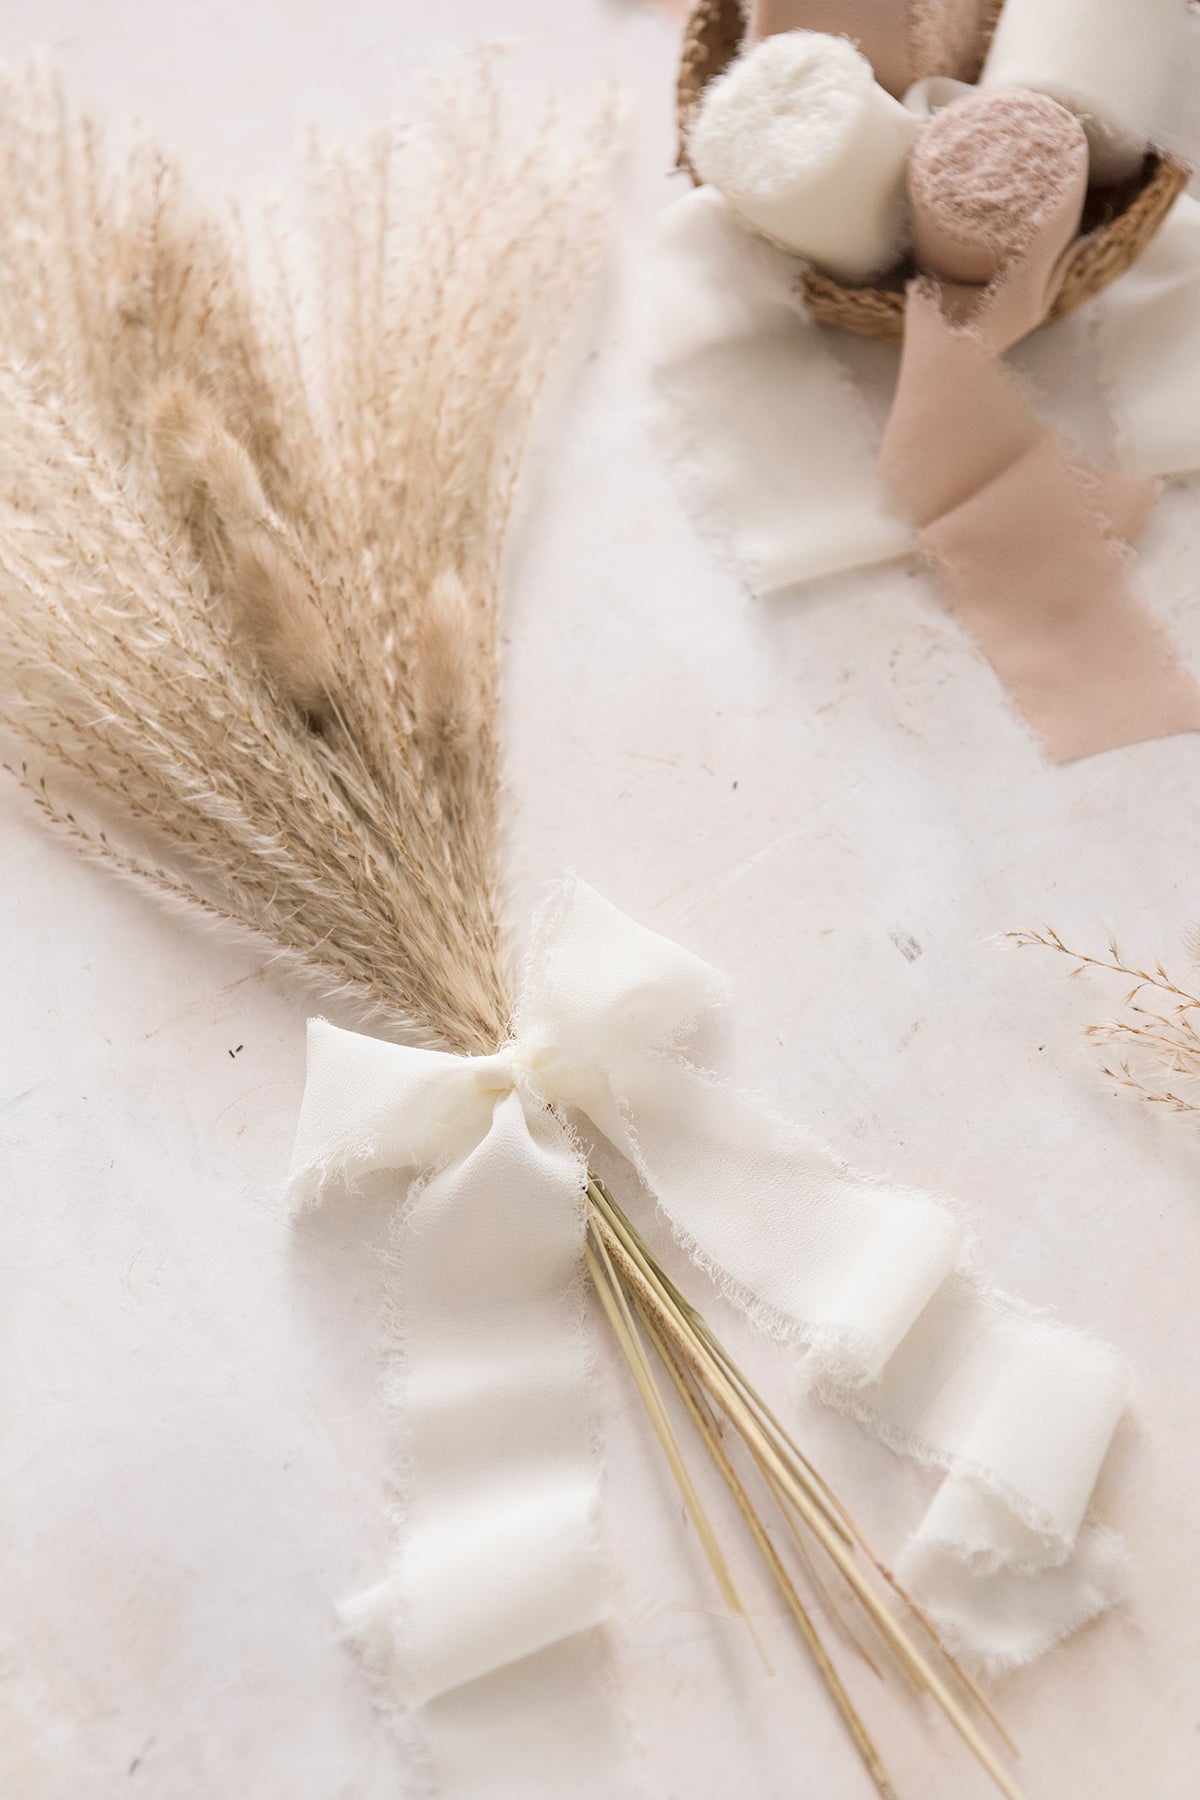 Chiffon ribbon with selvedge 15mm x 50m white